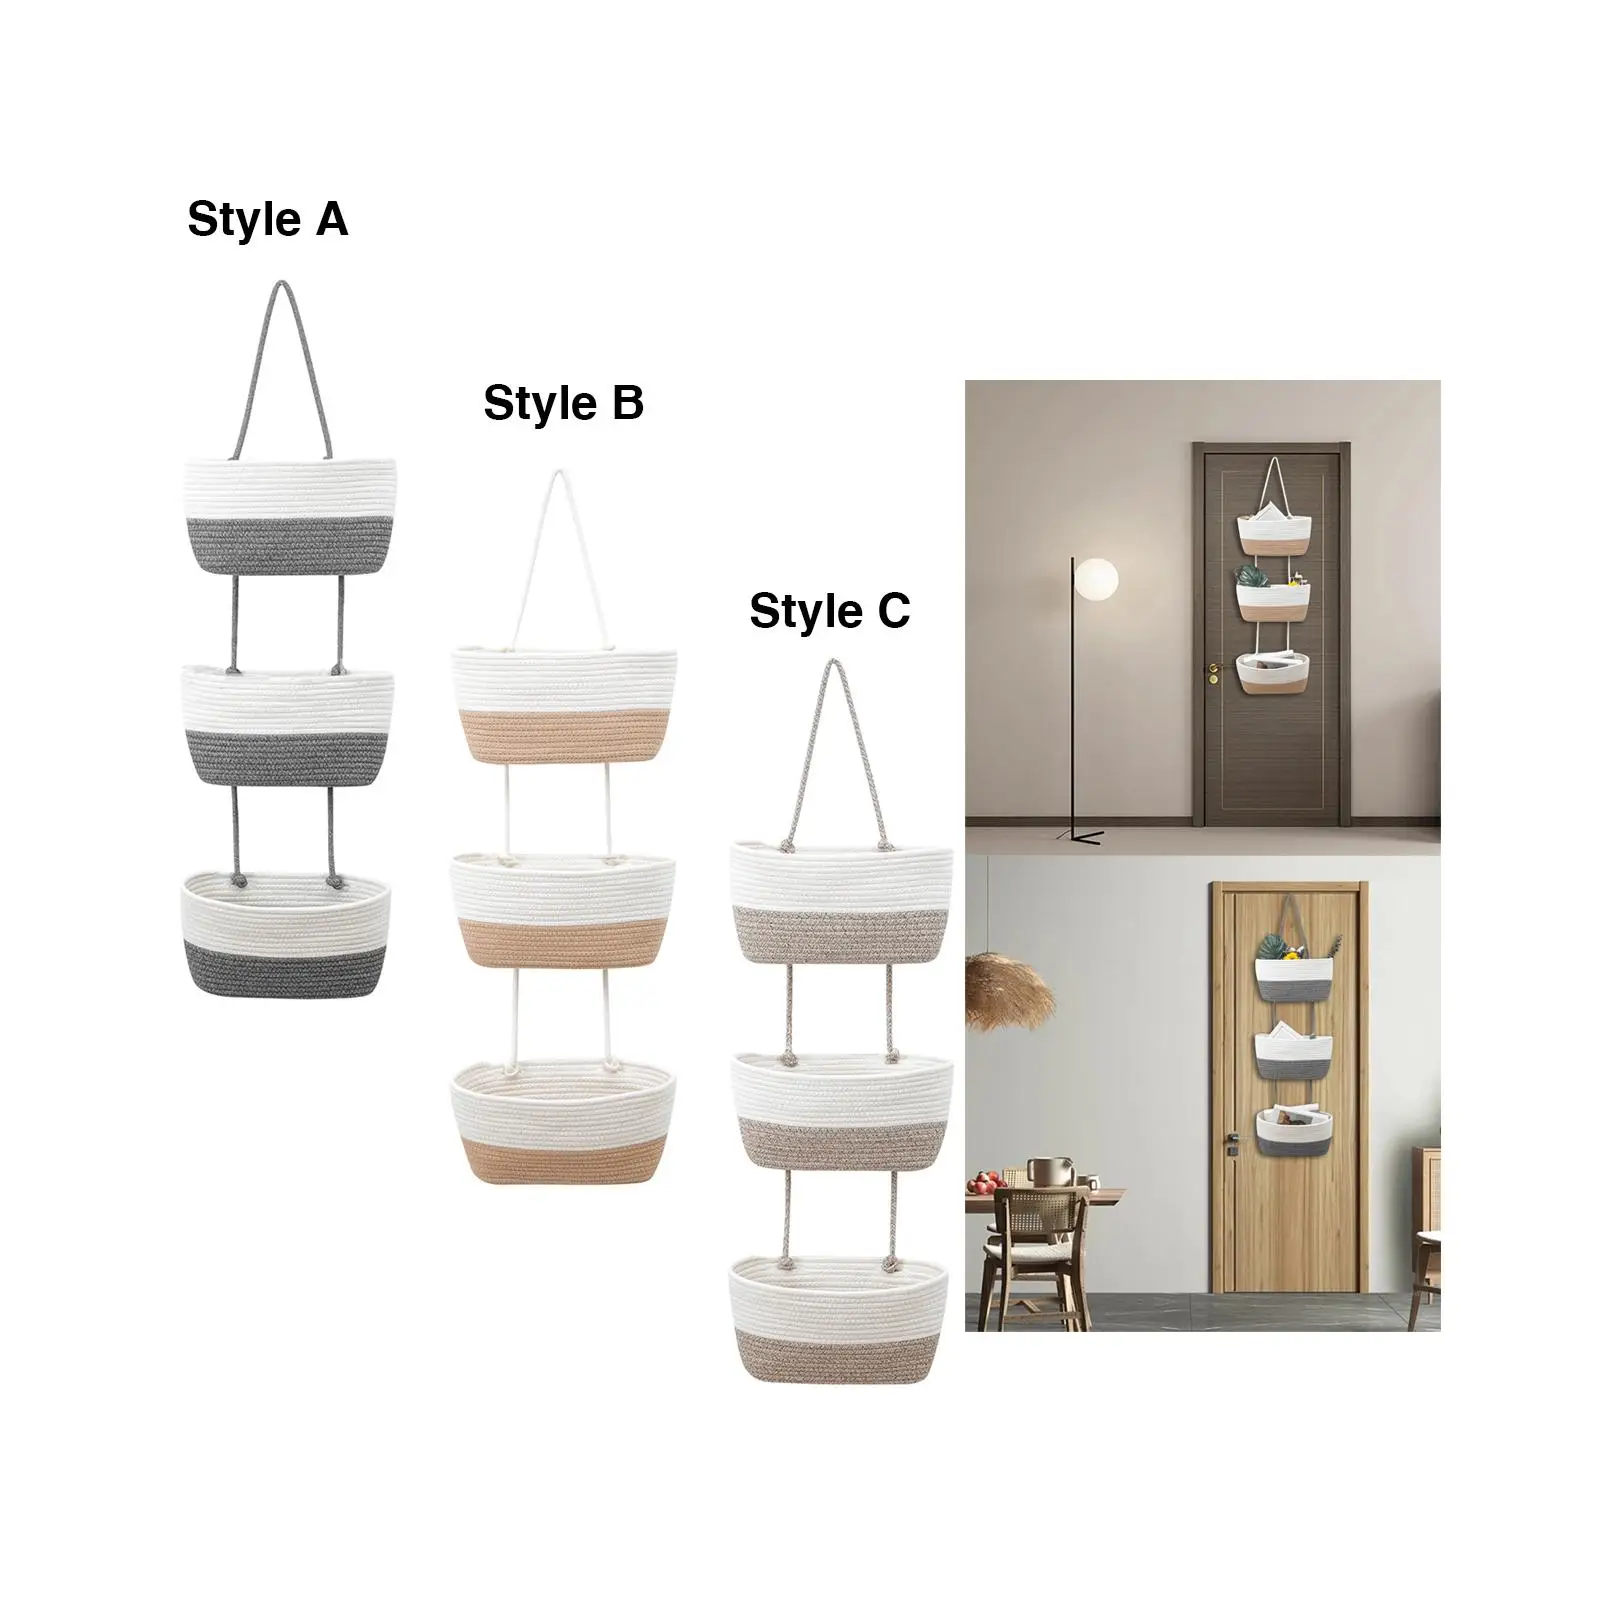 Hanging Basket Space Saving Cotton Wall Shelf for Kids Room Bathroom Kitchen